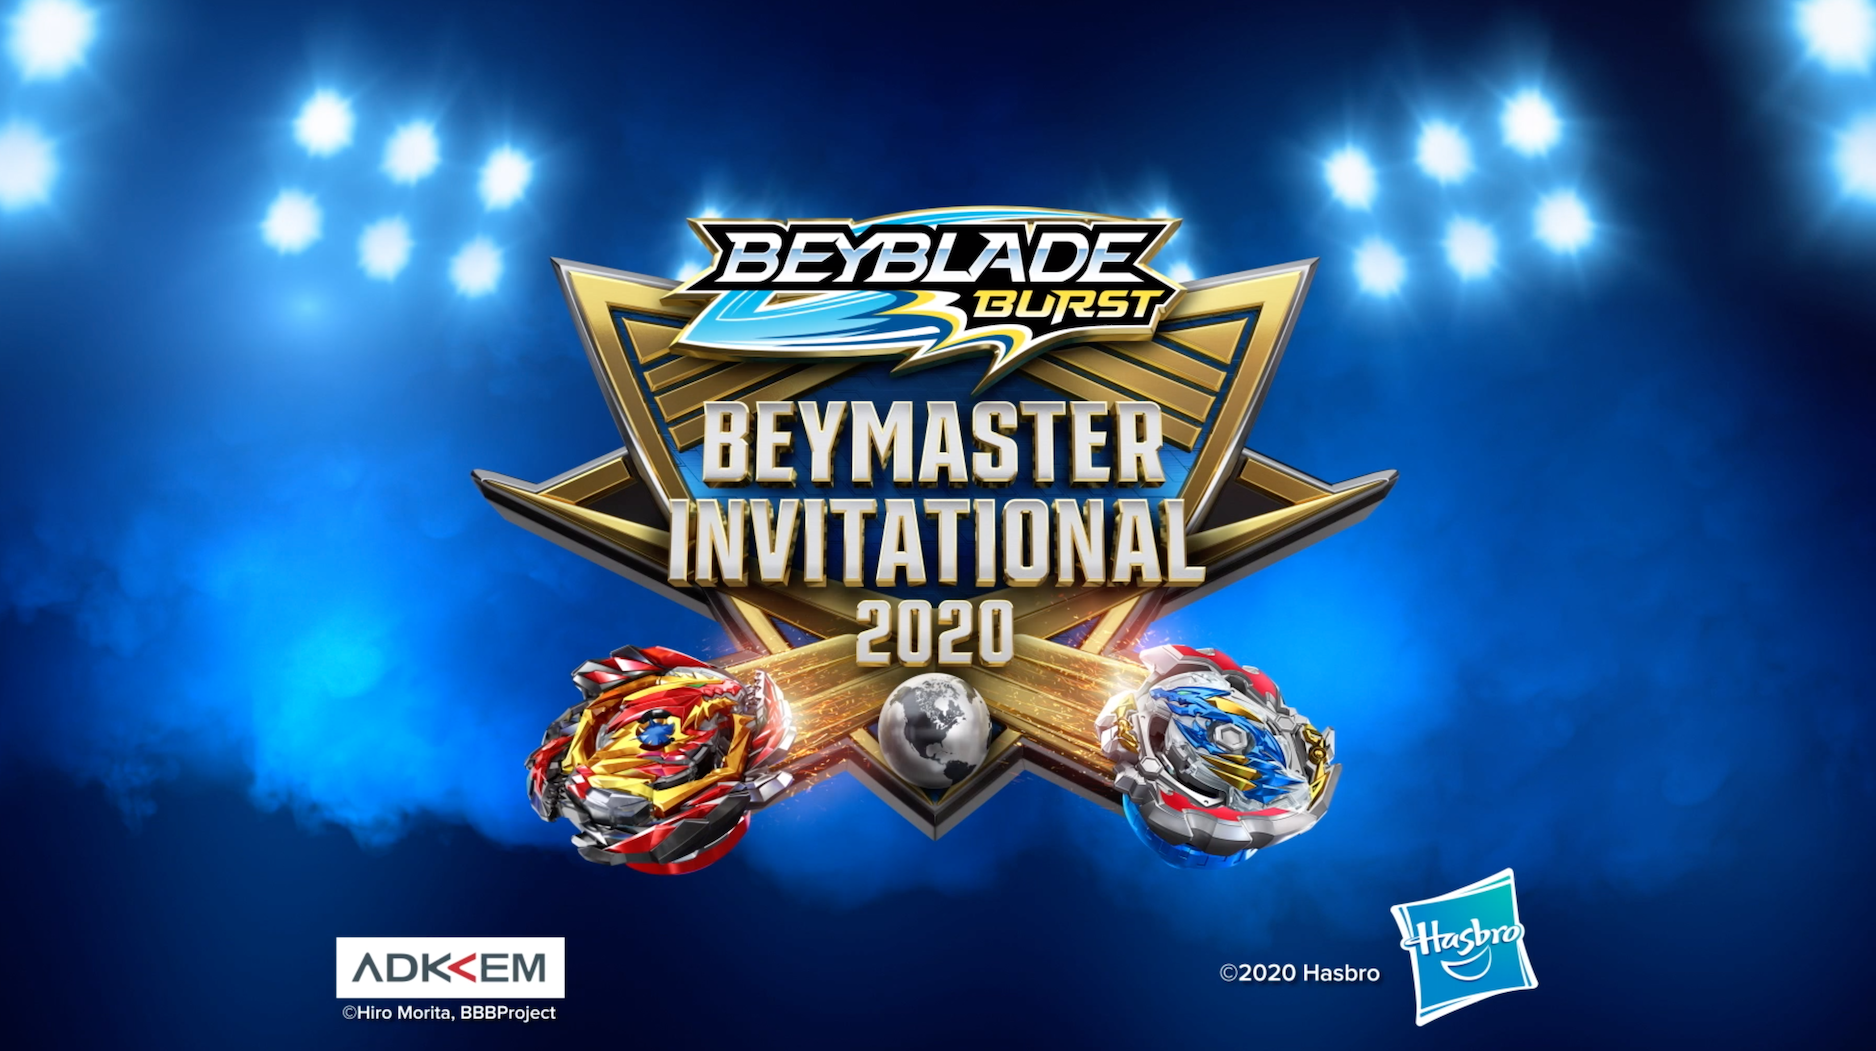 Influencers Battle It Out In The 2020 Beyblade Burst Digital Beymaster Invitational image